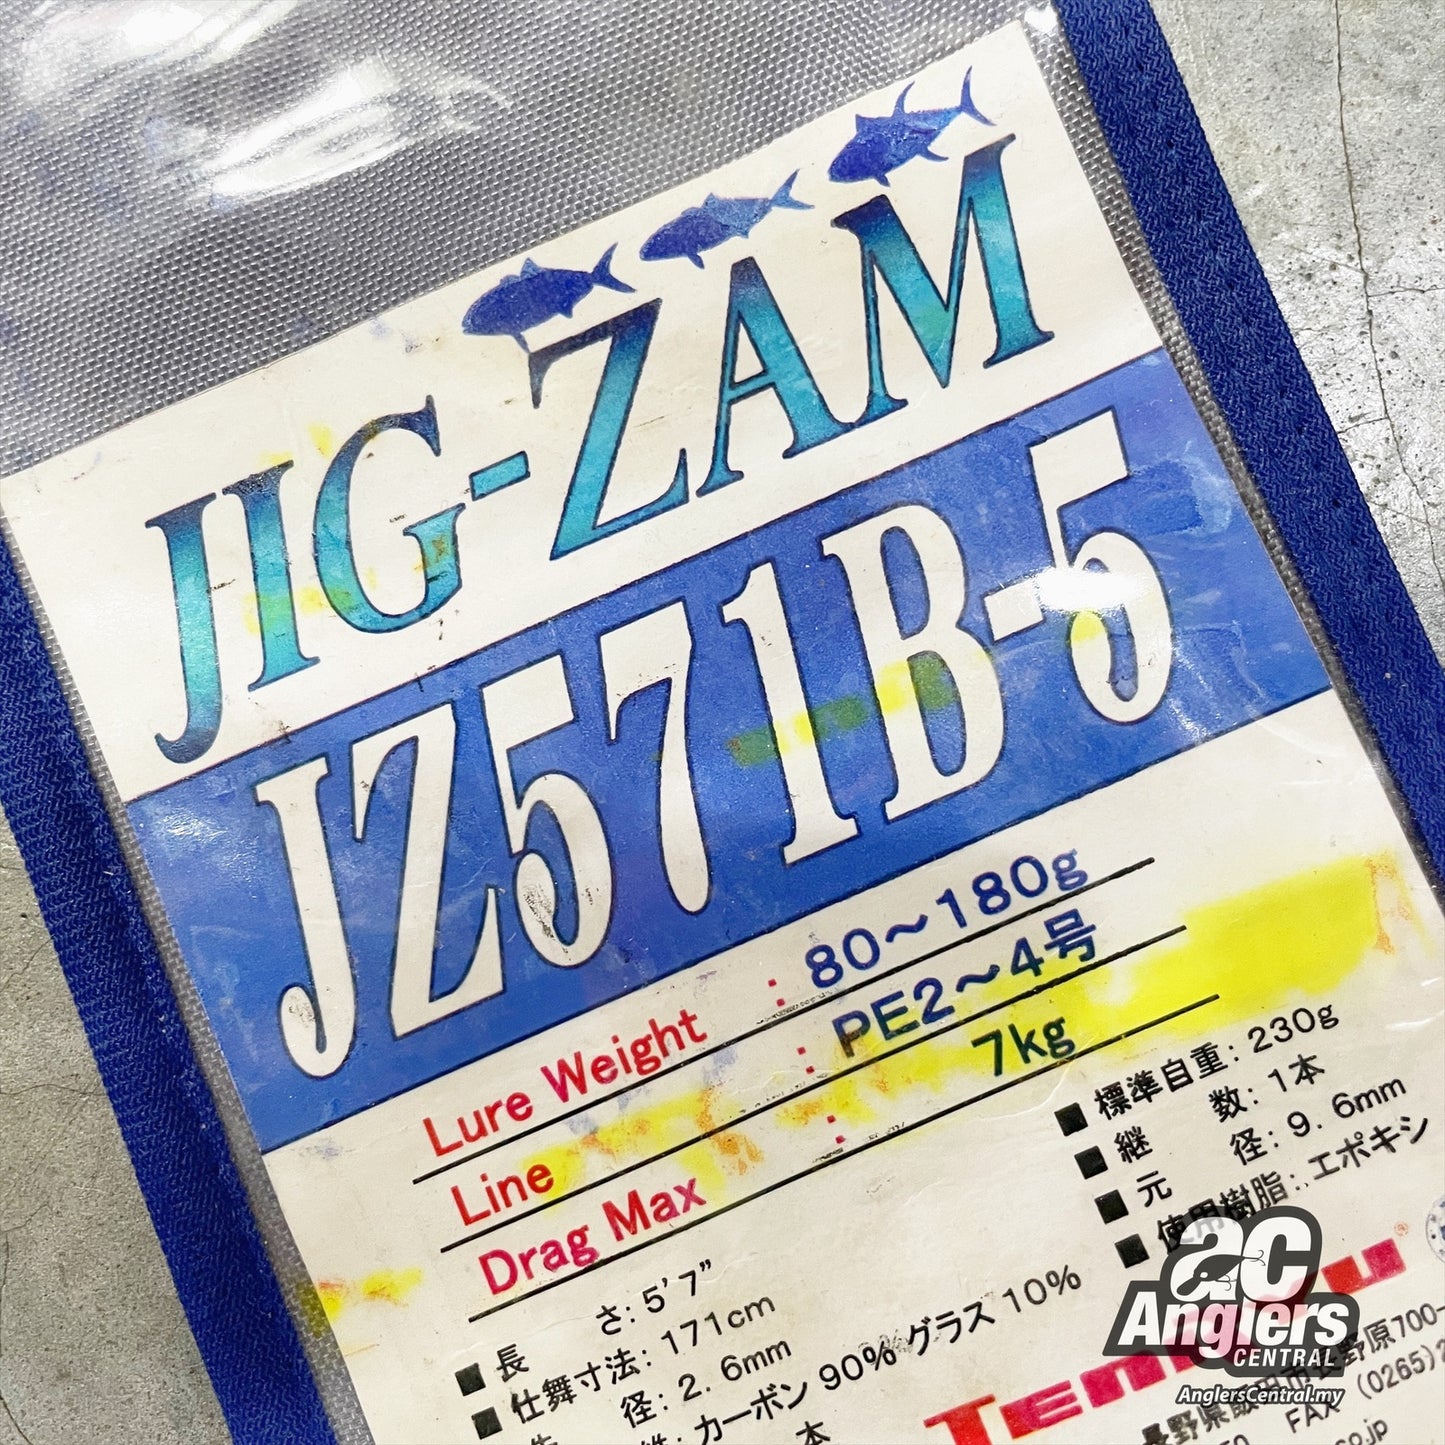 Jig-Zam JZ571B-5 (Unused)